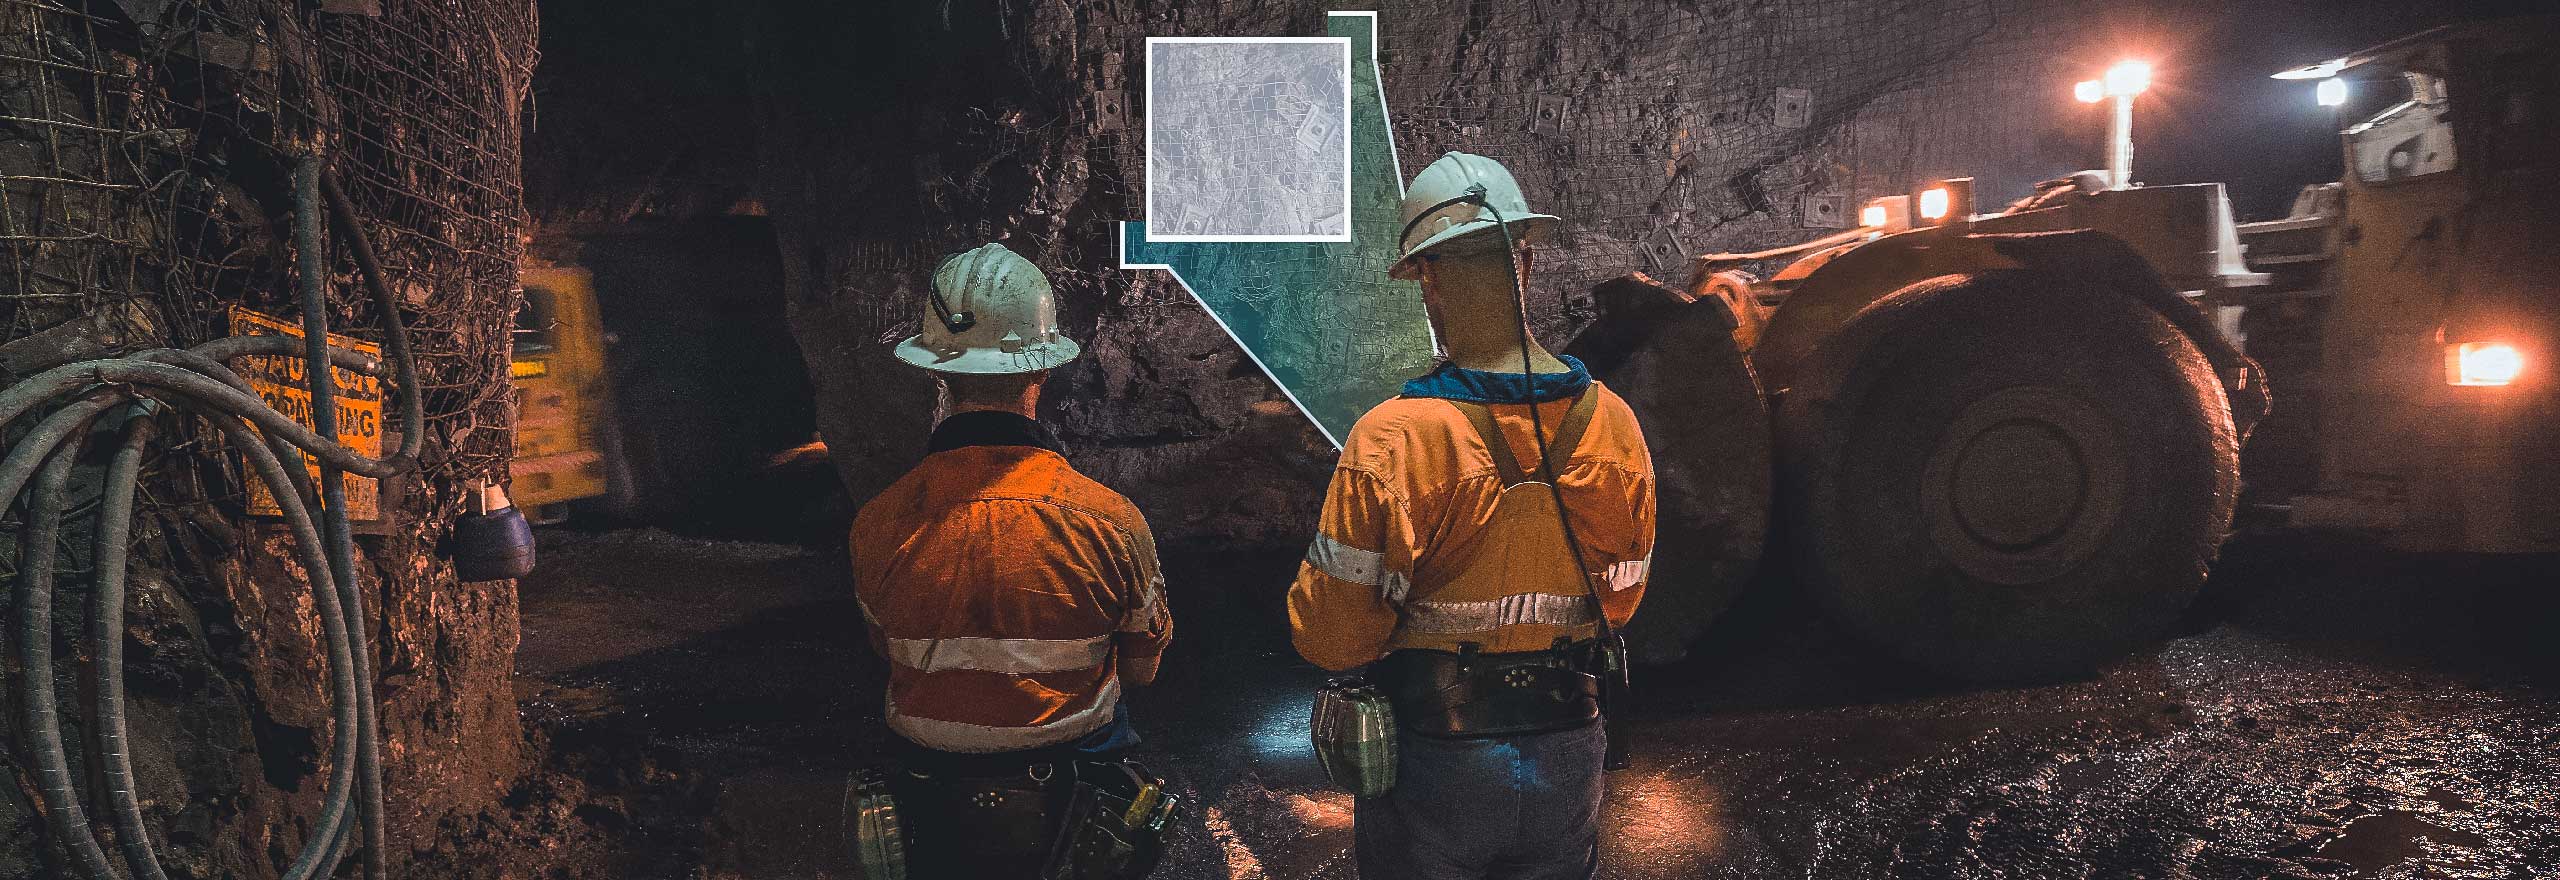 Spur underground mines to new heights